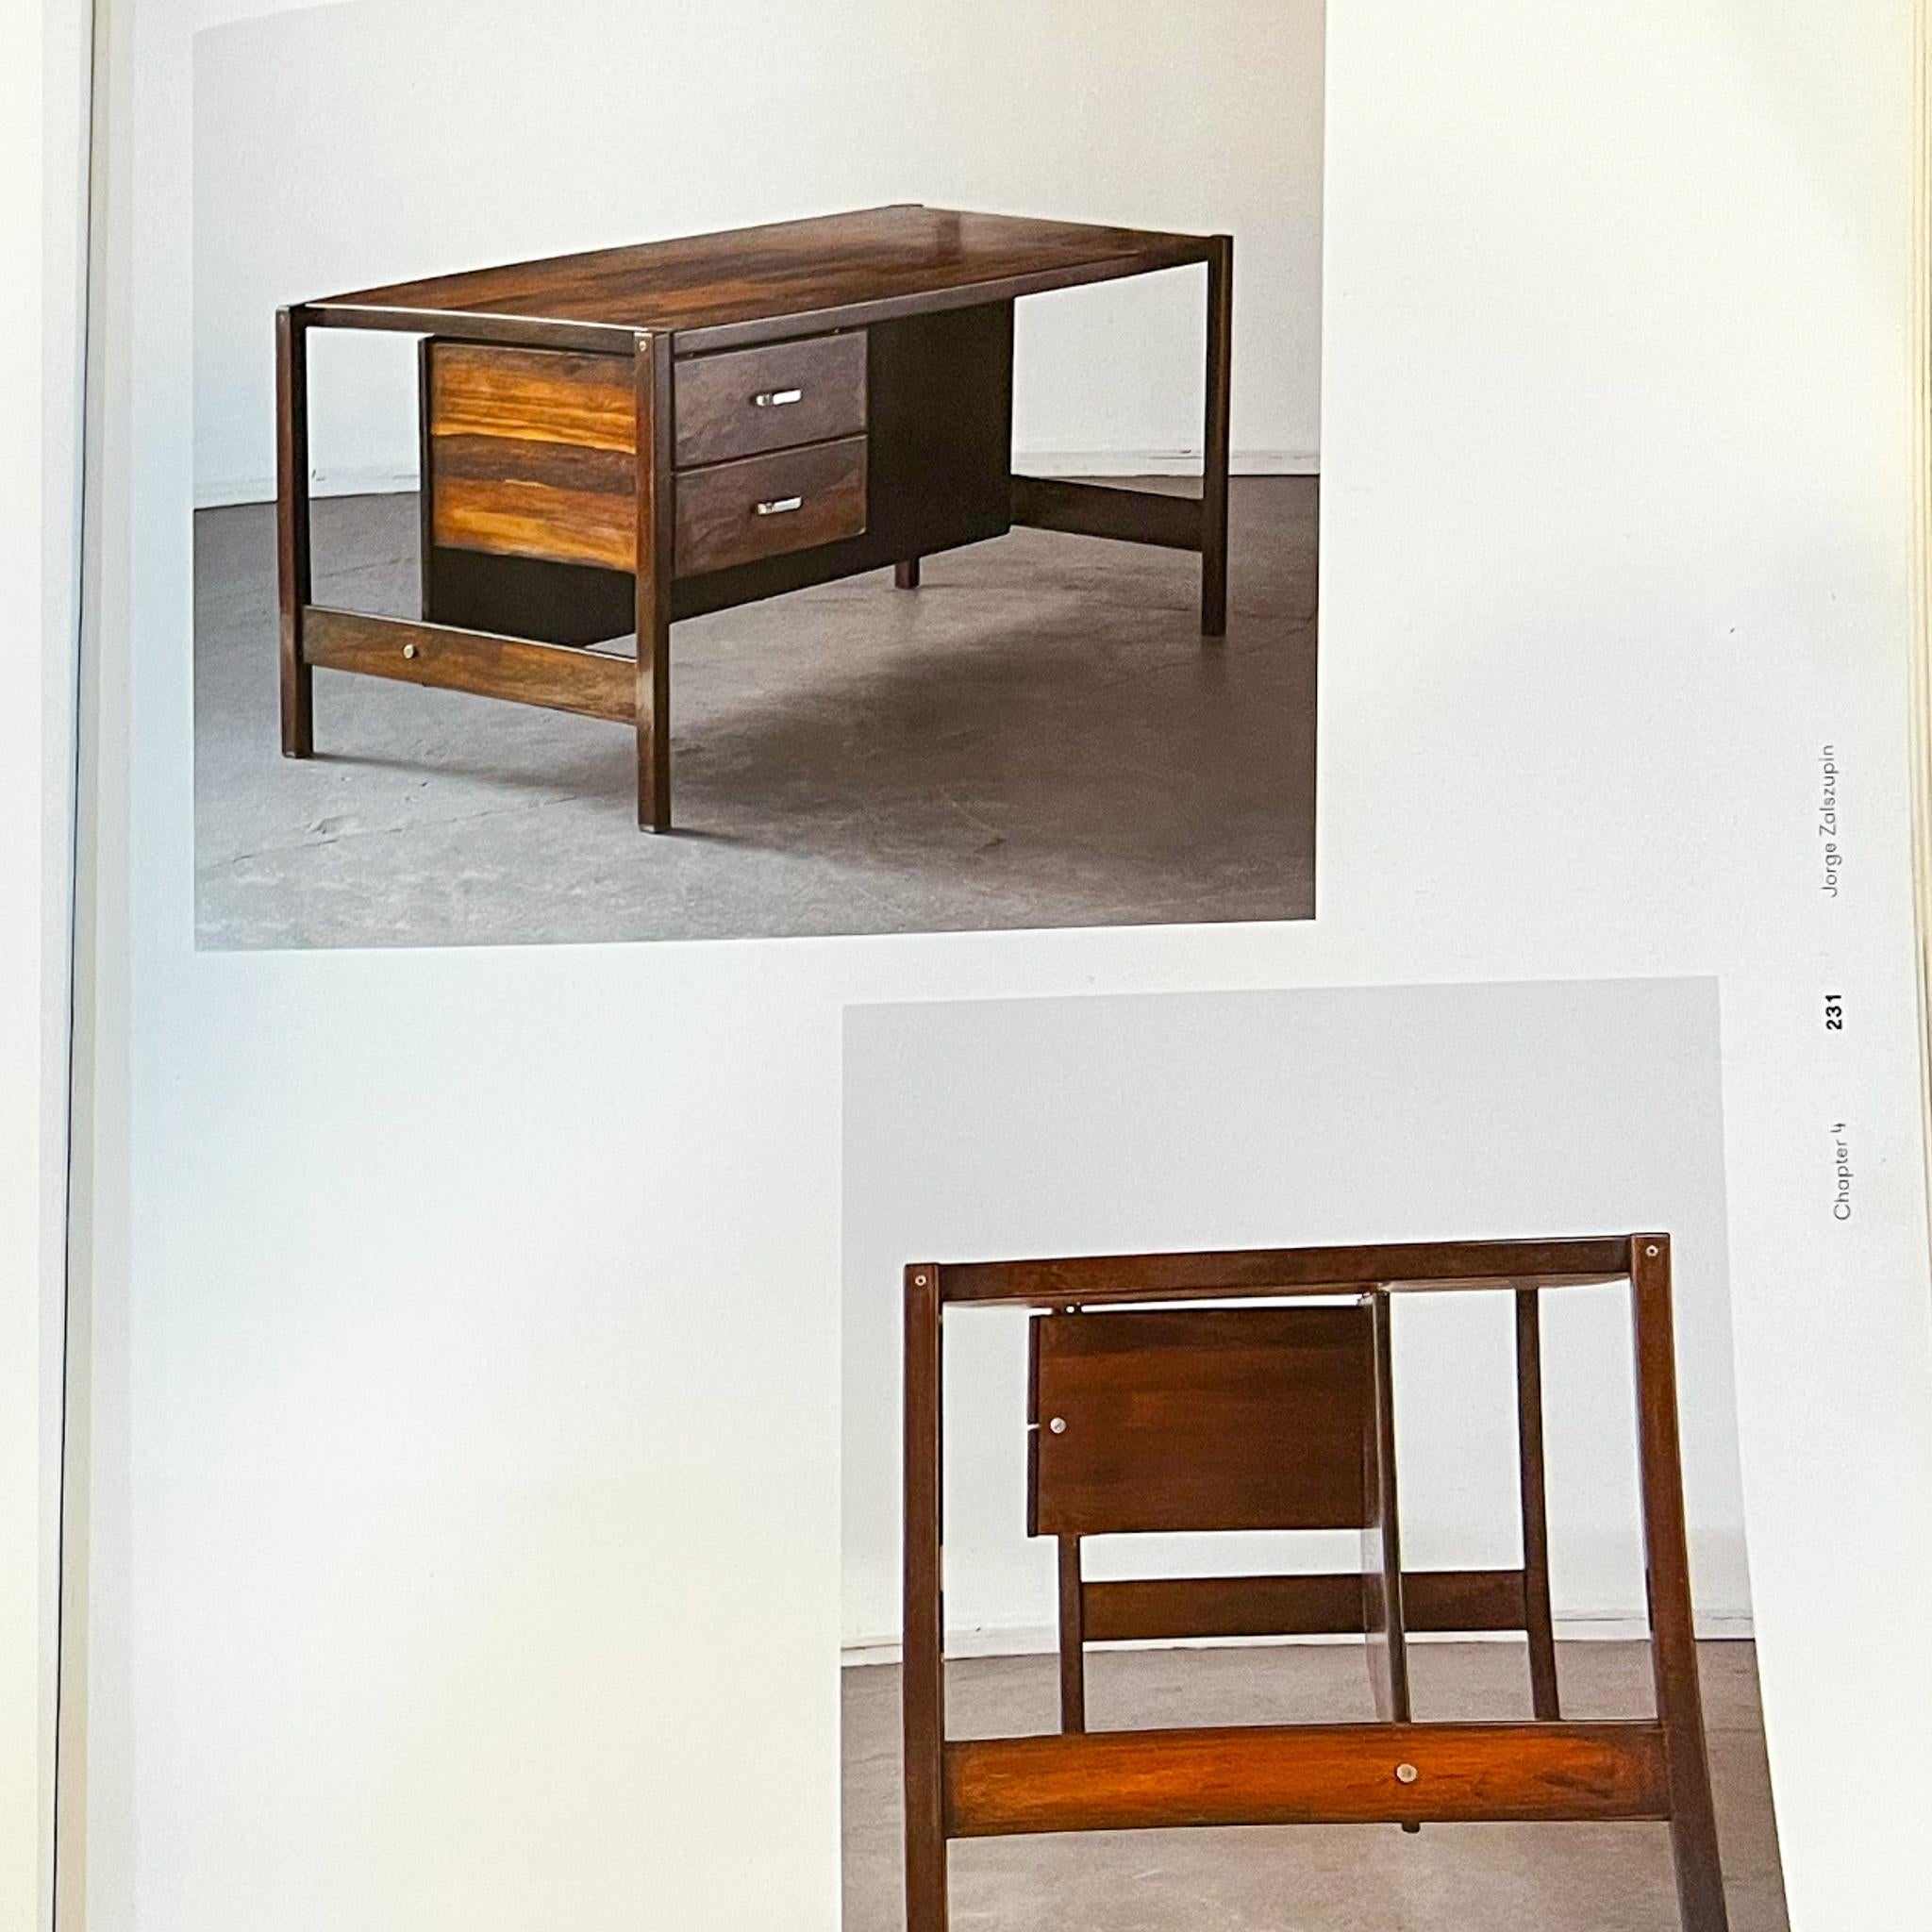 Mid-CenturyModern Desk in Hardwood by Jorge Zalszupin for L’atelier, c. 1960s For Sale 8